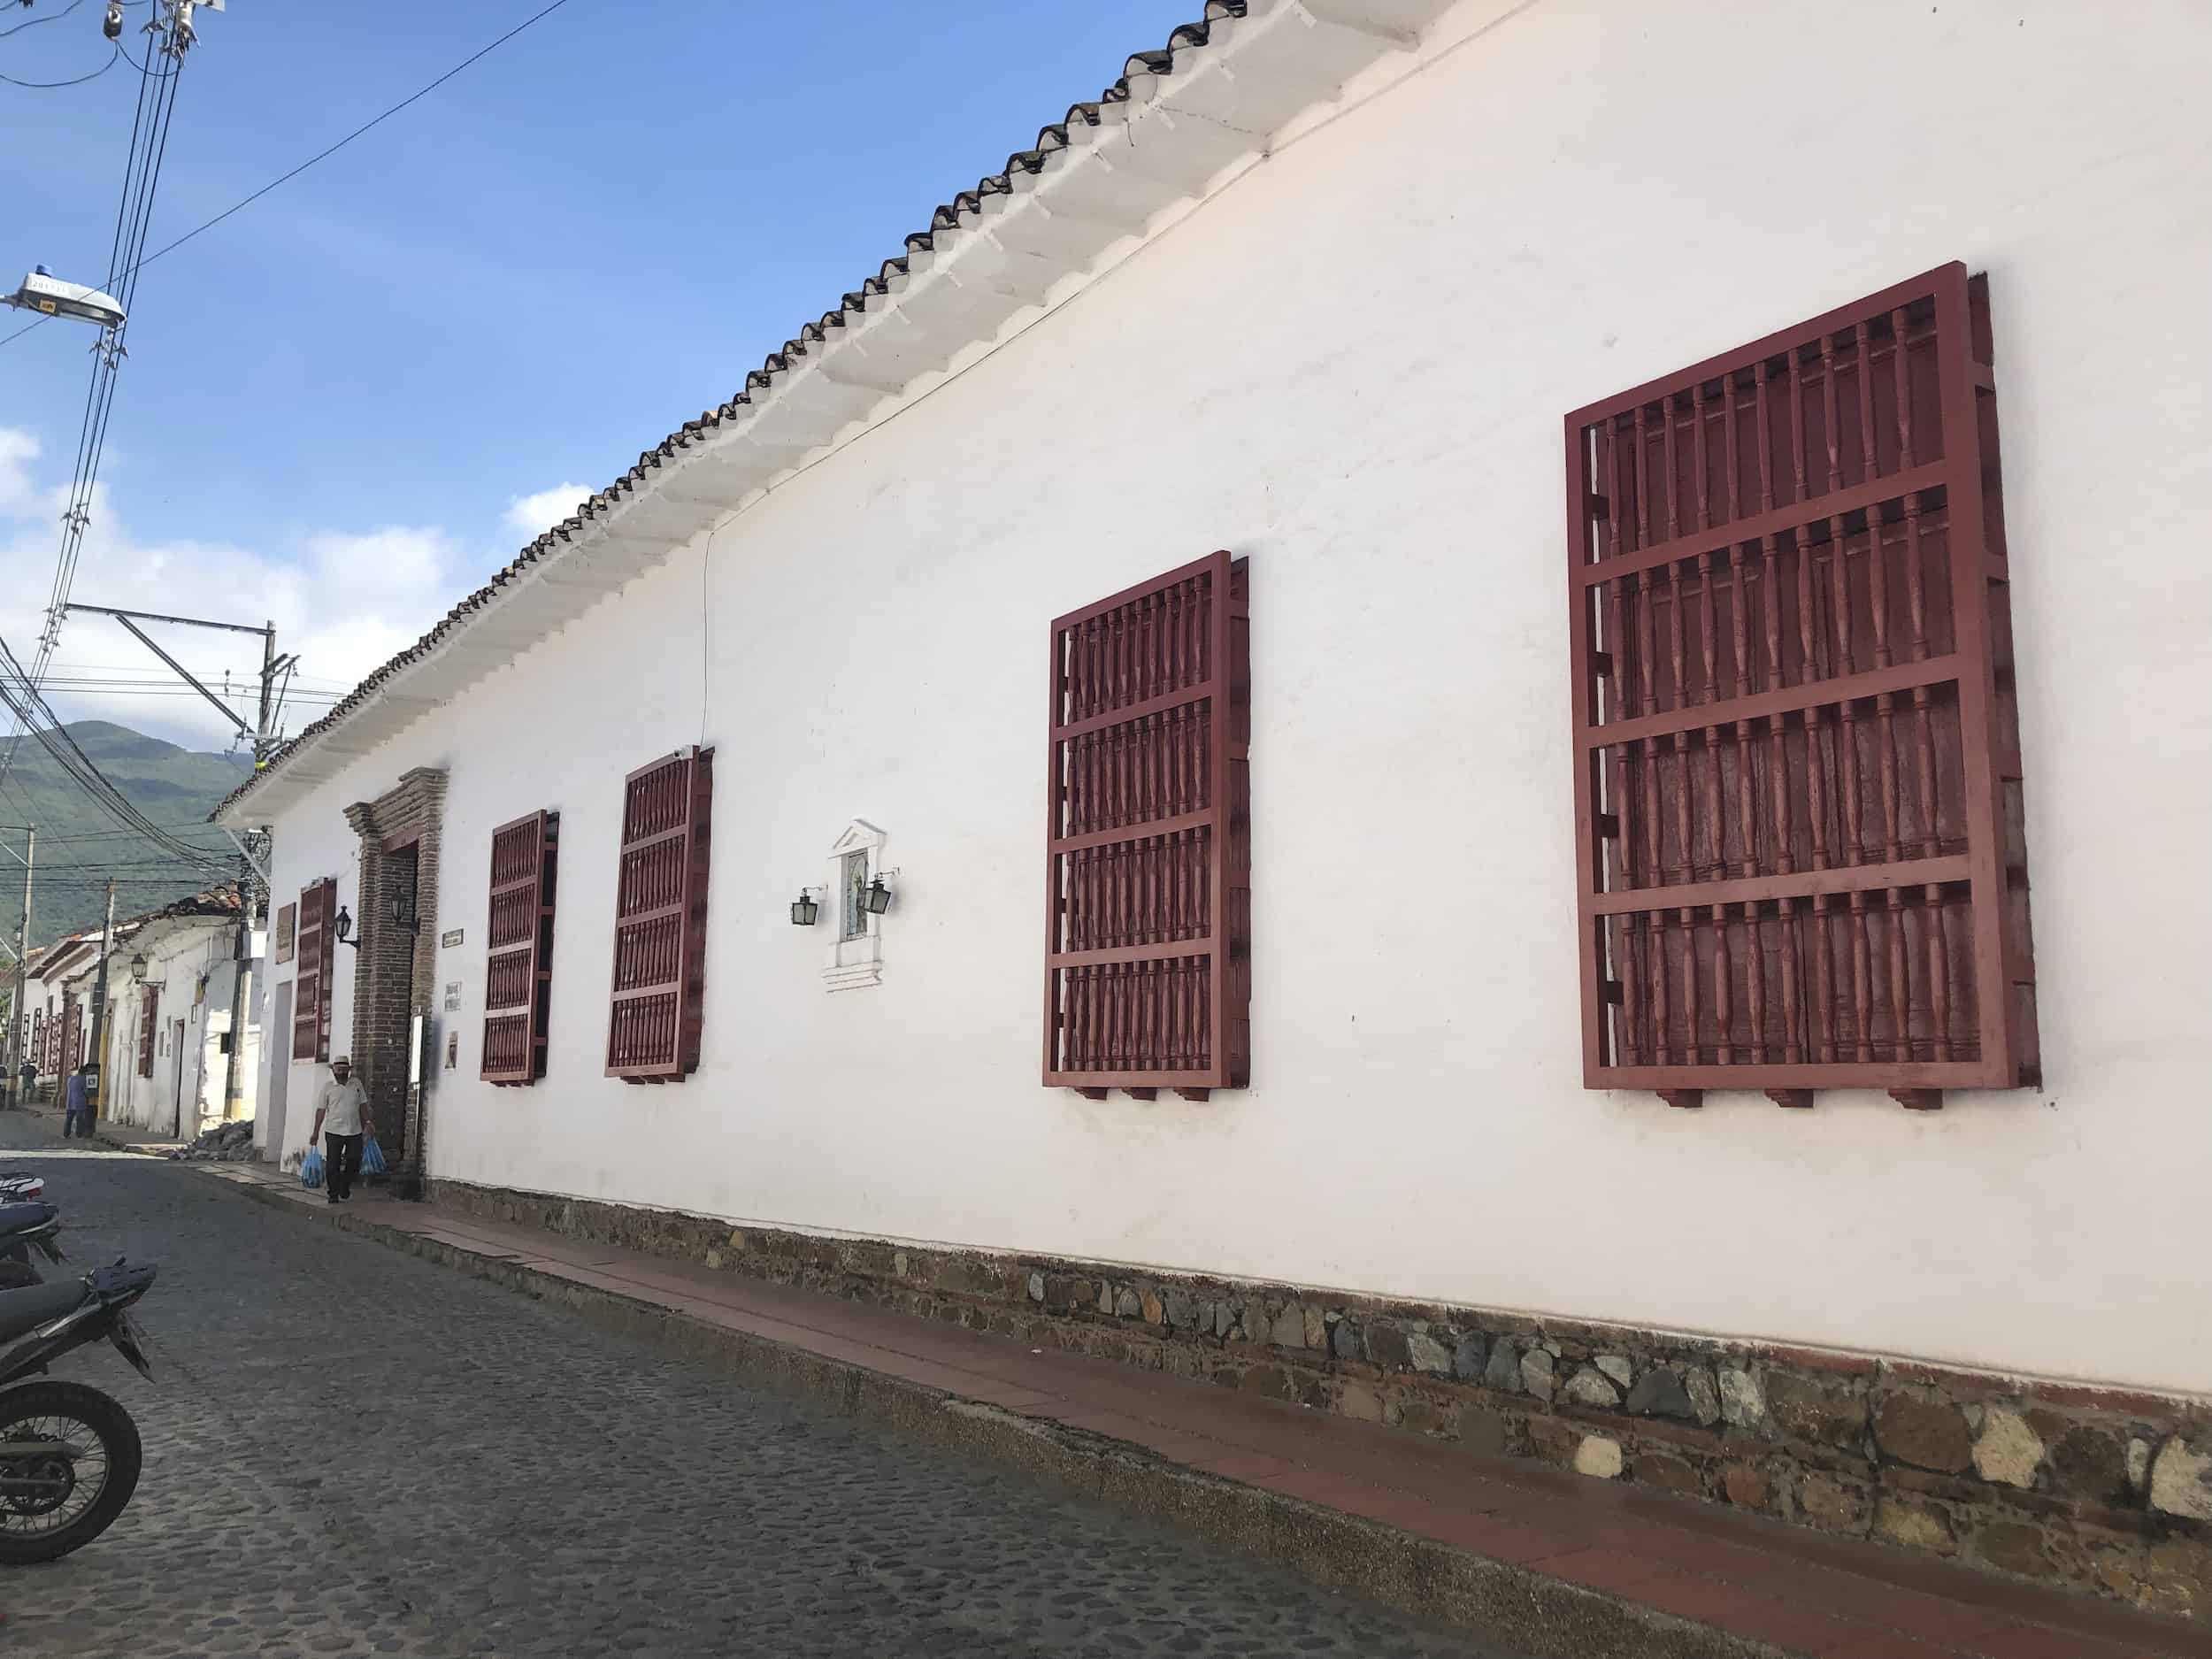 Saint Thomas Aquinas Seminary in Santa Fe de Antioquia, Colombia